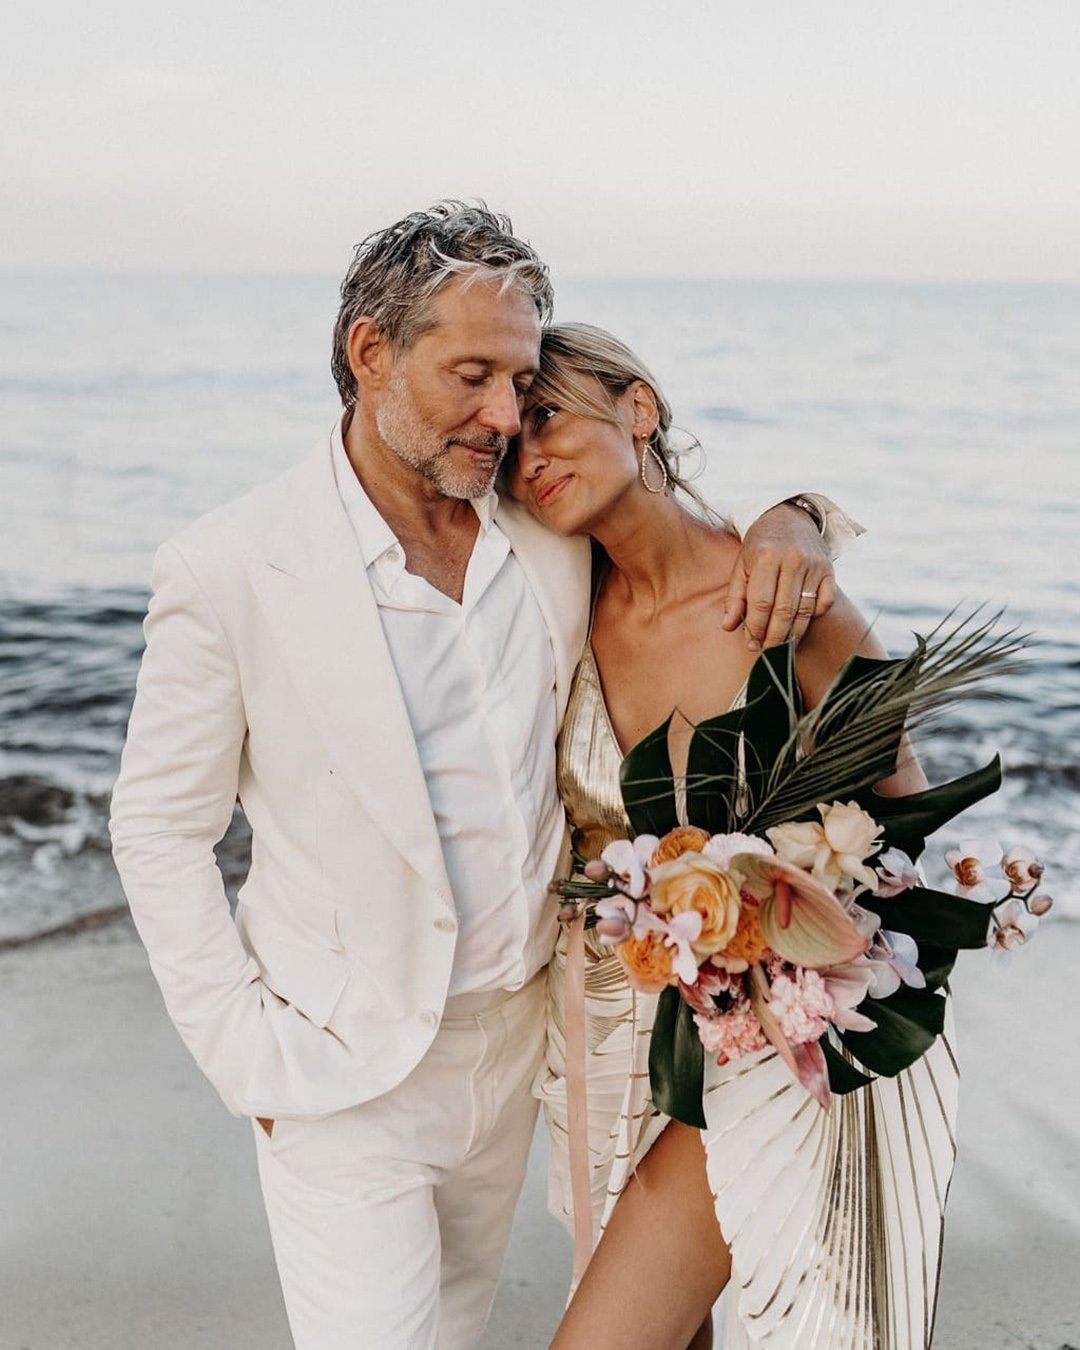 mens wedding attire white jacket beach lorenzoaccardi photograph